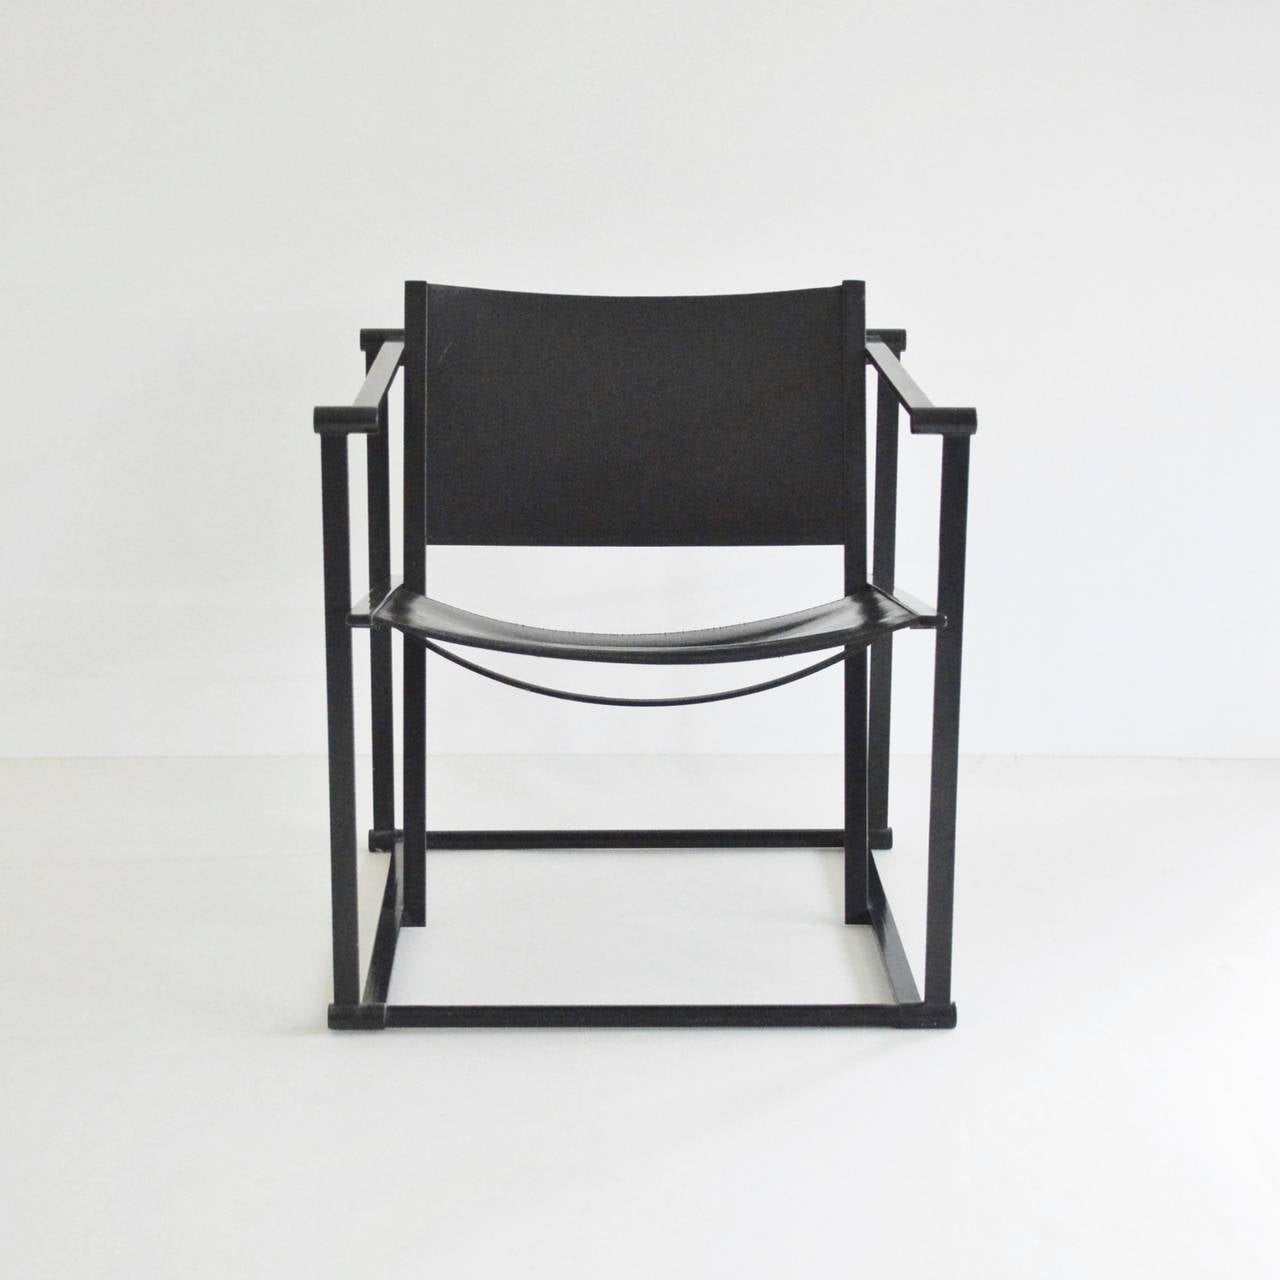 Dutch Radboud Van Beekum FM62 Cube Chair in Black Leather